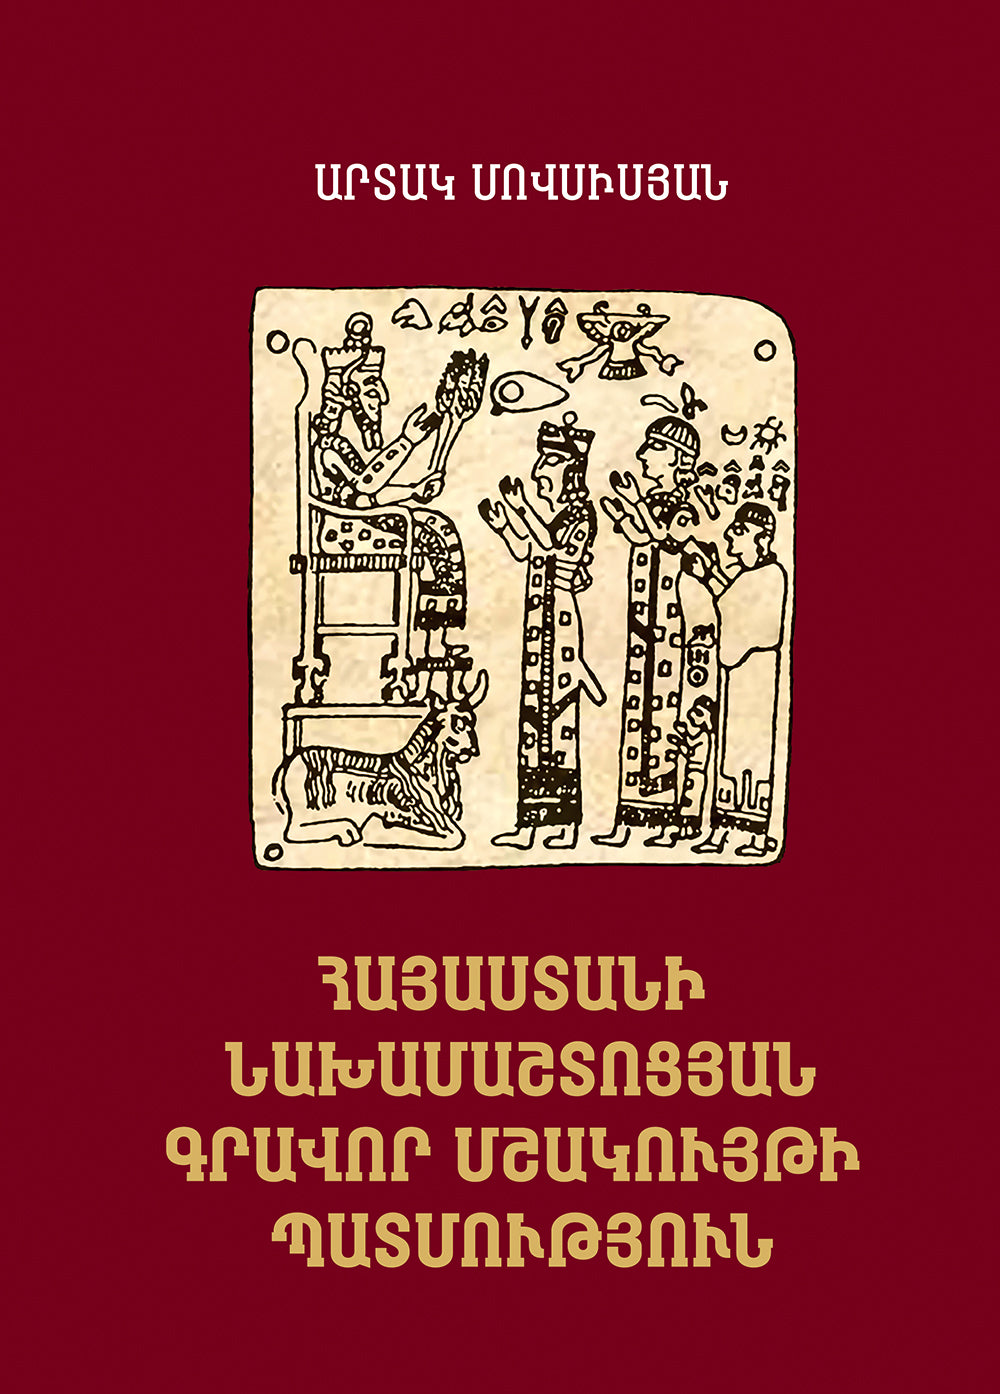 Artak Movsisyan - History of Pre-Mashtots Written Culture of Armenia